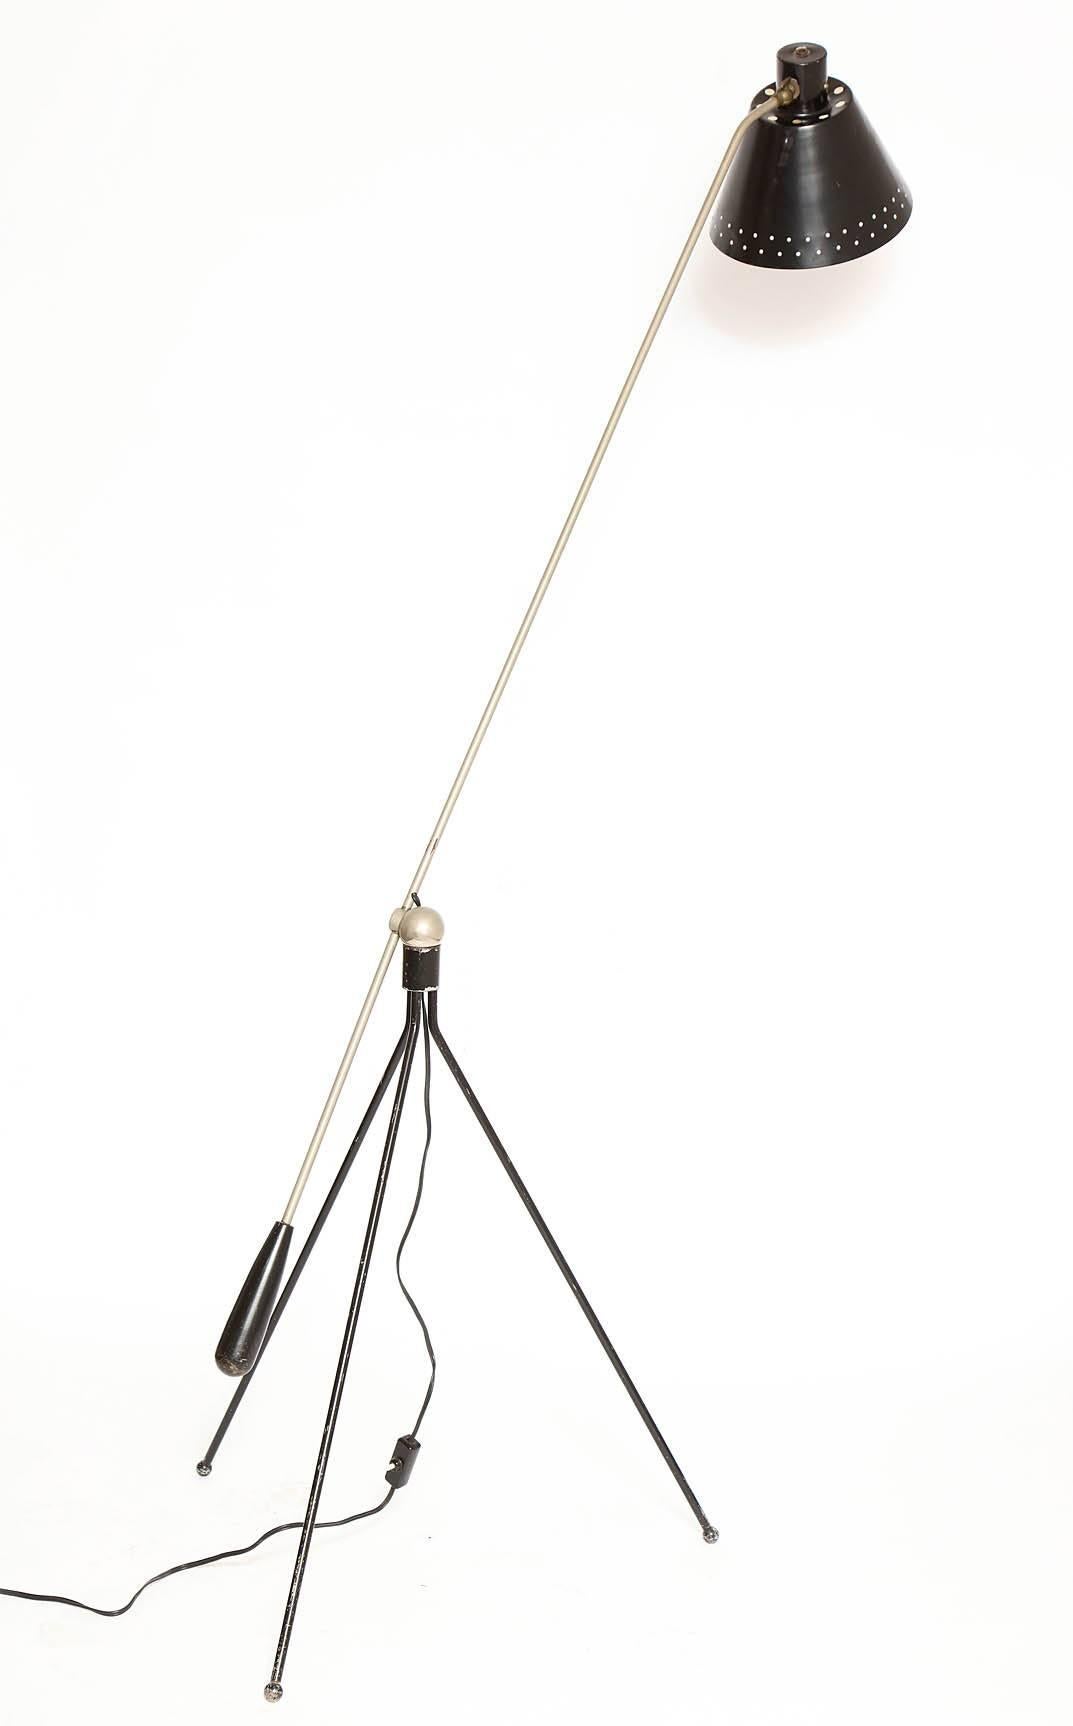 Mid-20th Century H fillekes Articulated Floor Lamp Mid Century Modern Denmark 1950's For Sale